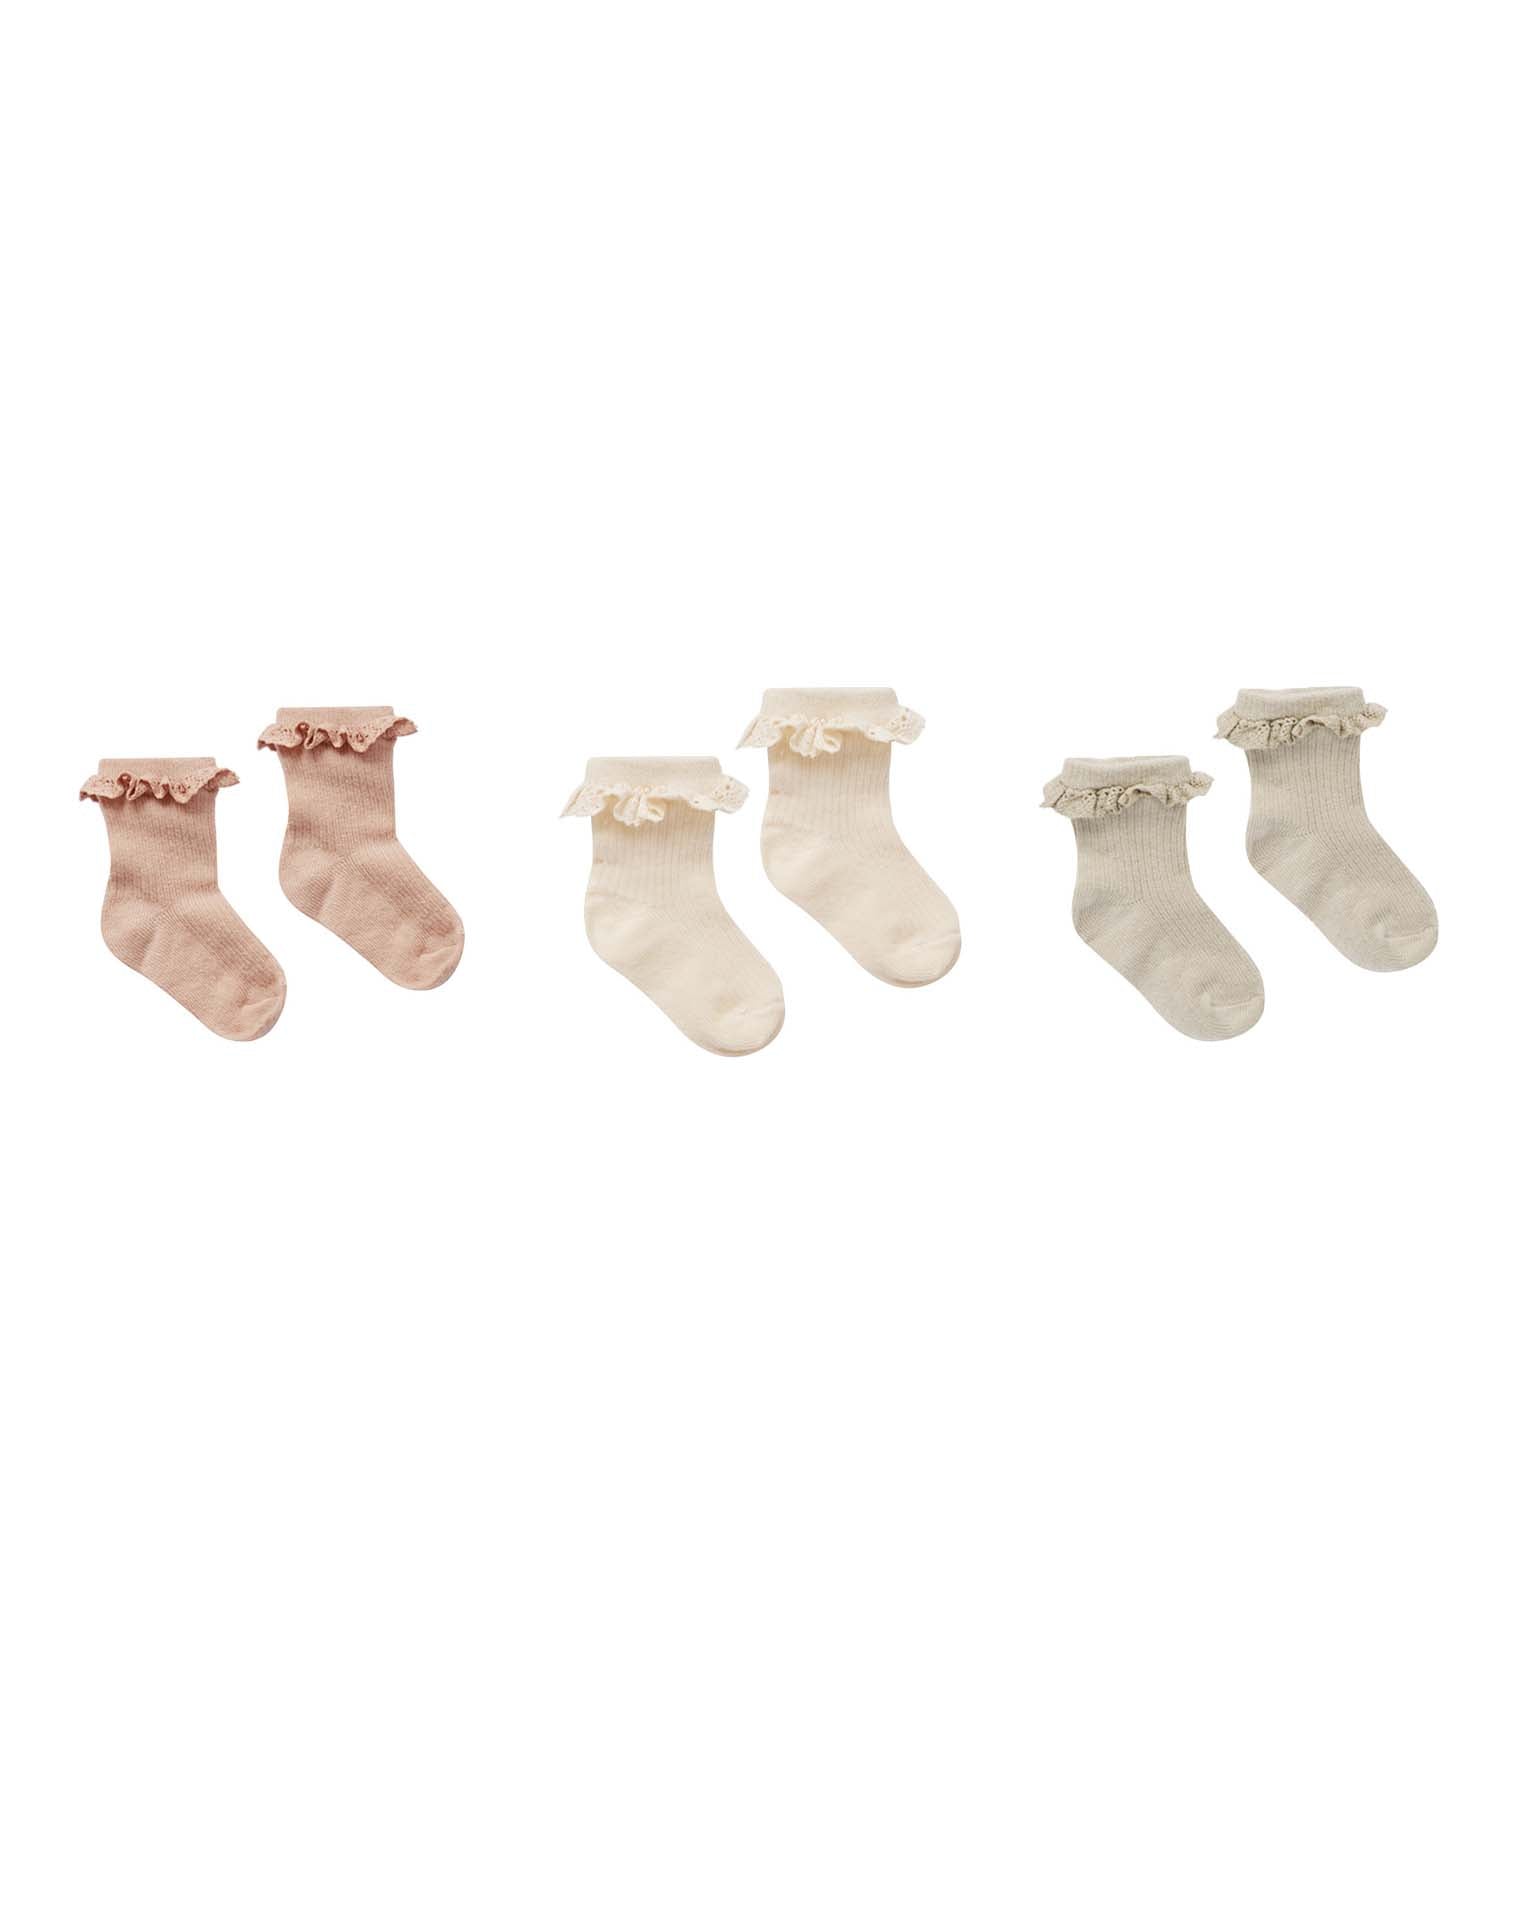 Little rylee + cru accessories ruffle socks in dove, natural, blush